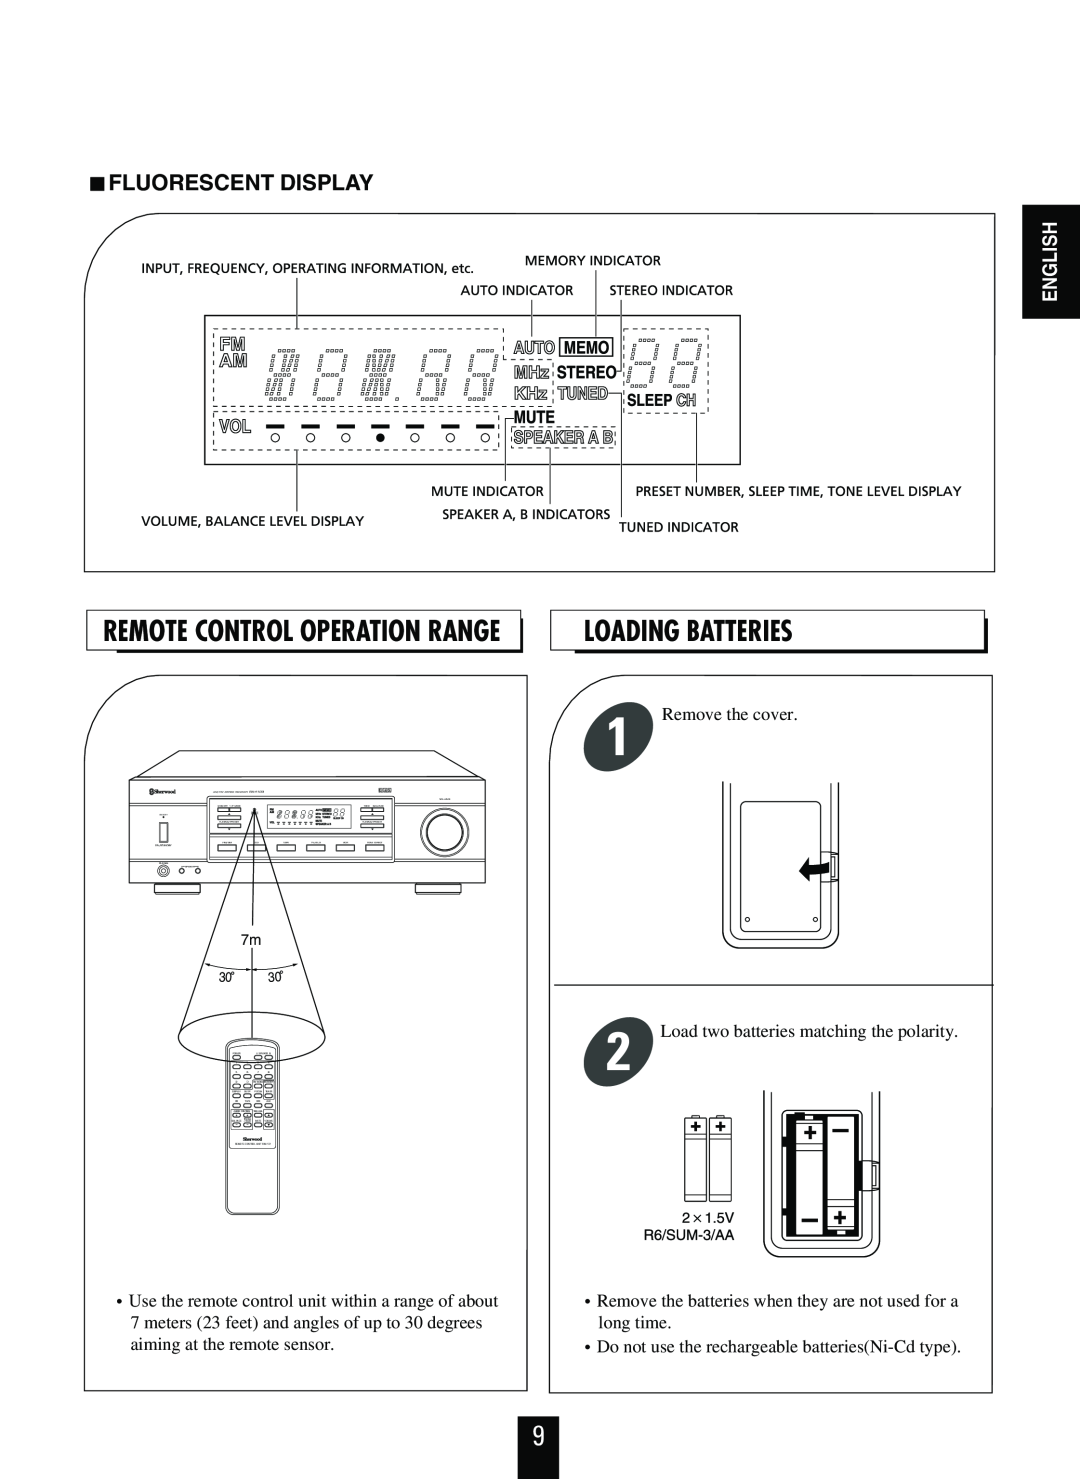 Sherwood RX-4103 manual Loading Batteries, Remote Control Operation Range, Fluorescent Display, English 